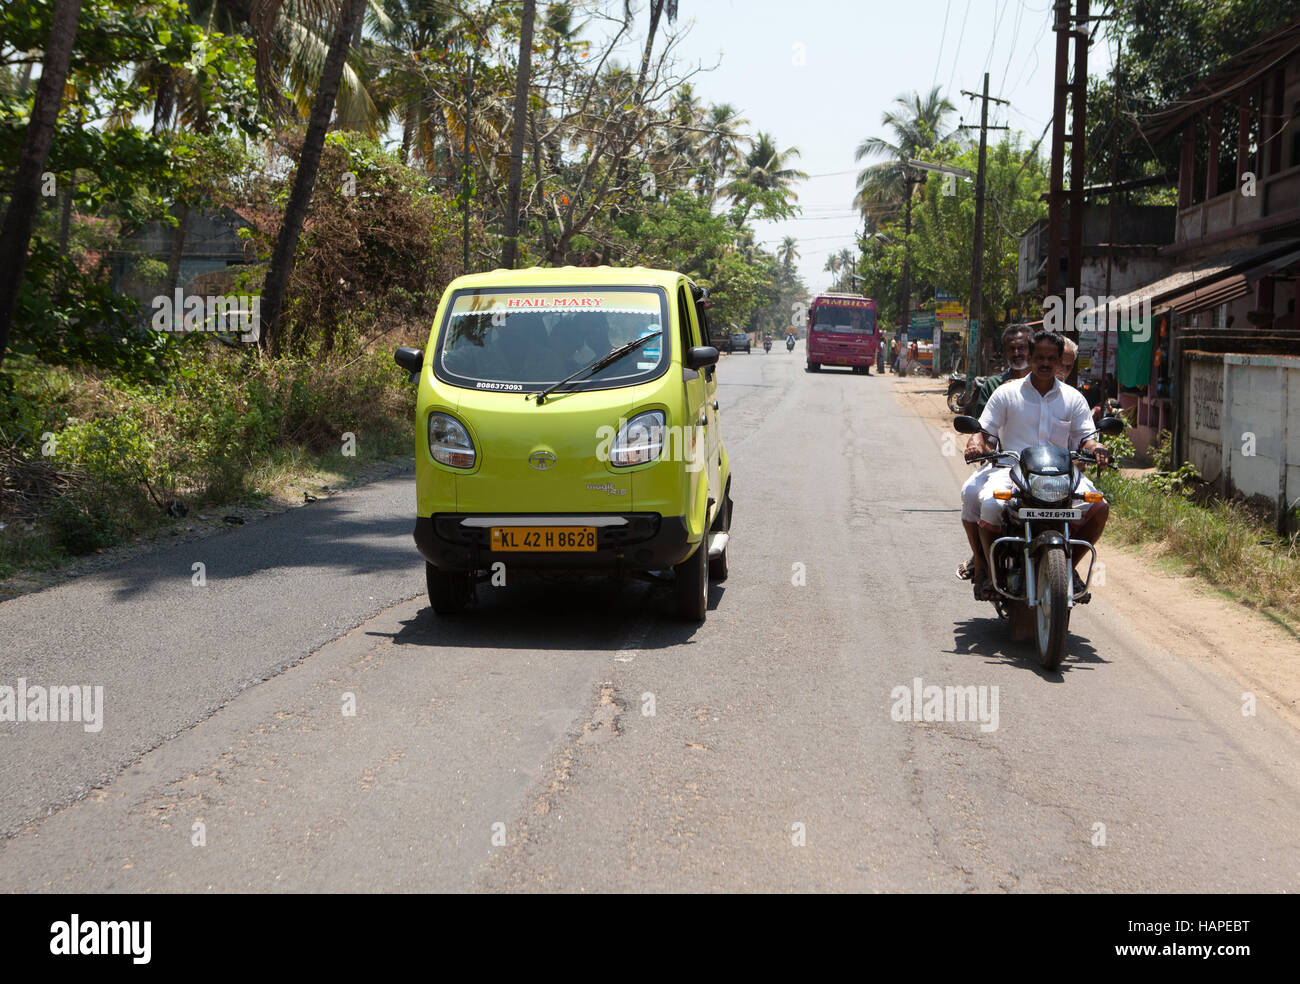 New Tata auto rickshaw taxi in Kerala, India Stock Photo